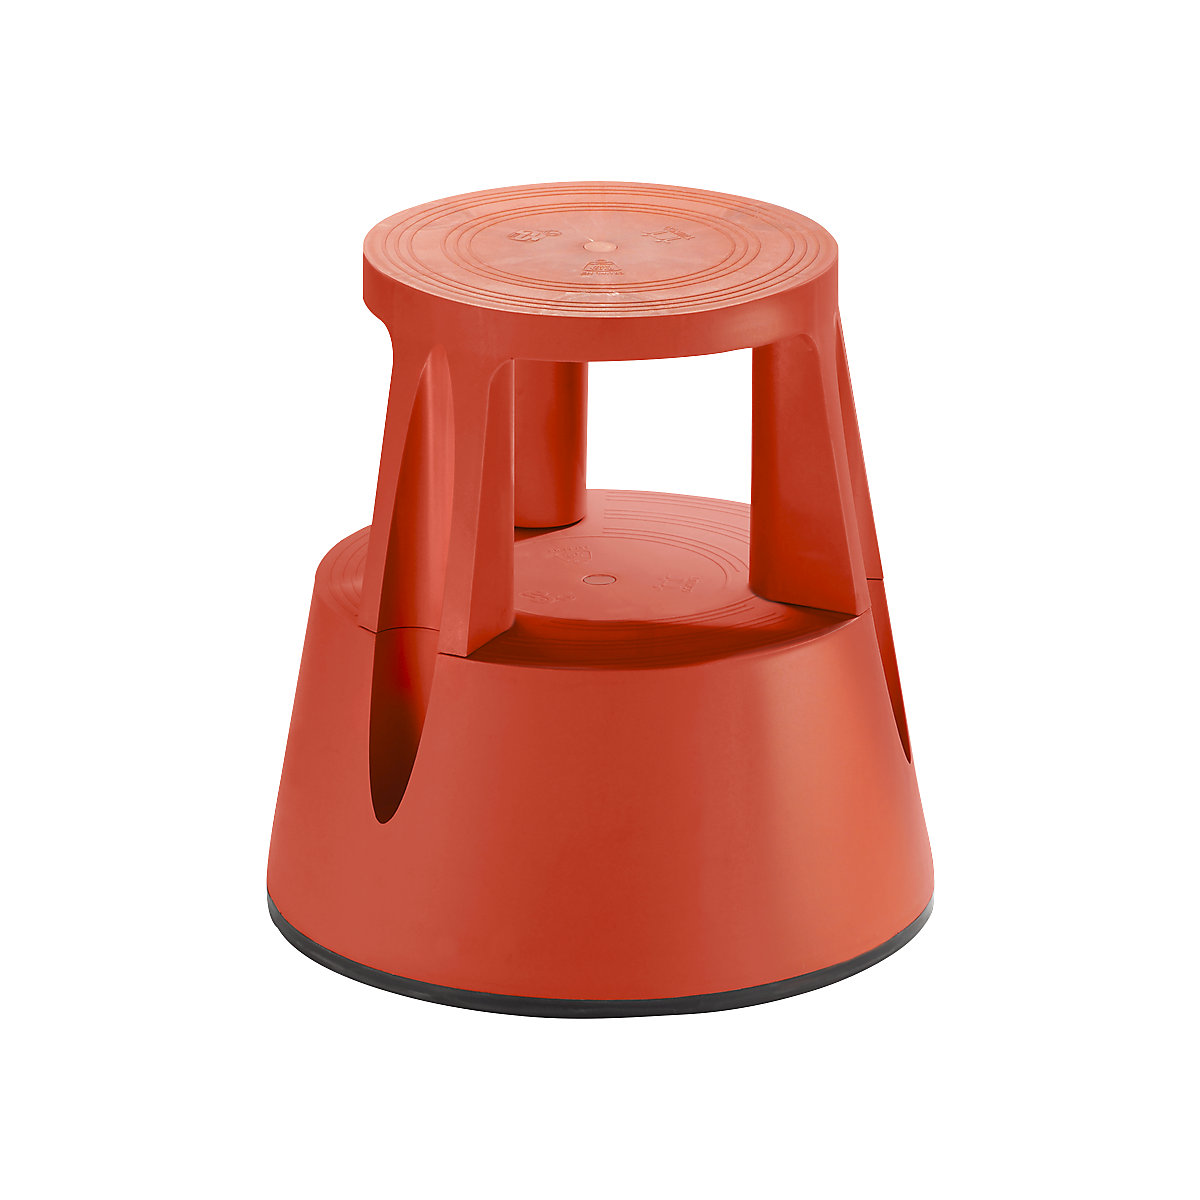 Kick stool made of shatterproof plastic – Twinco